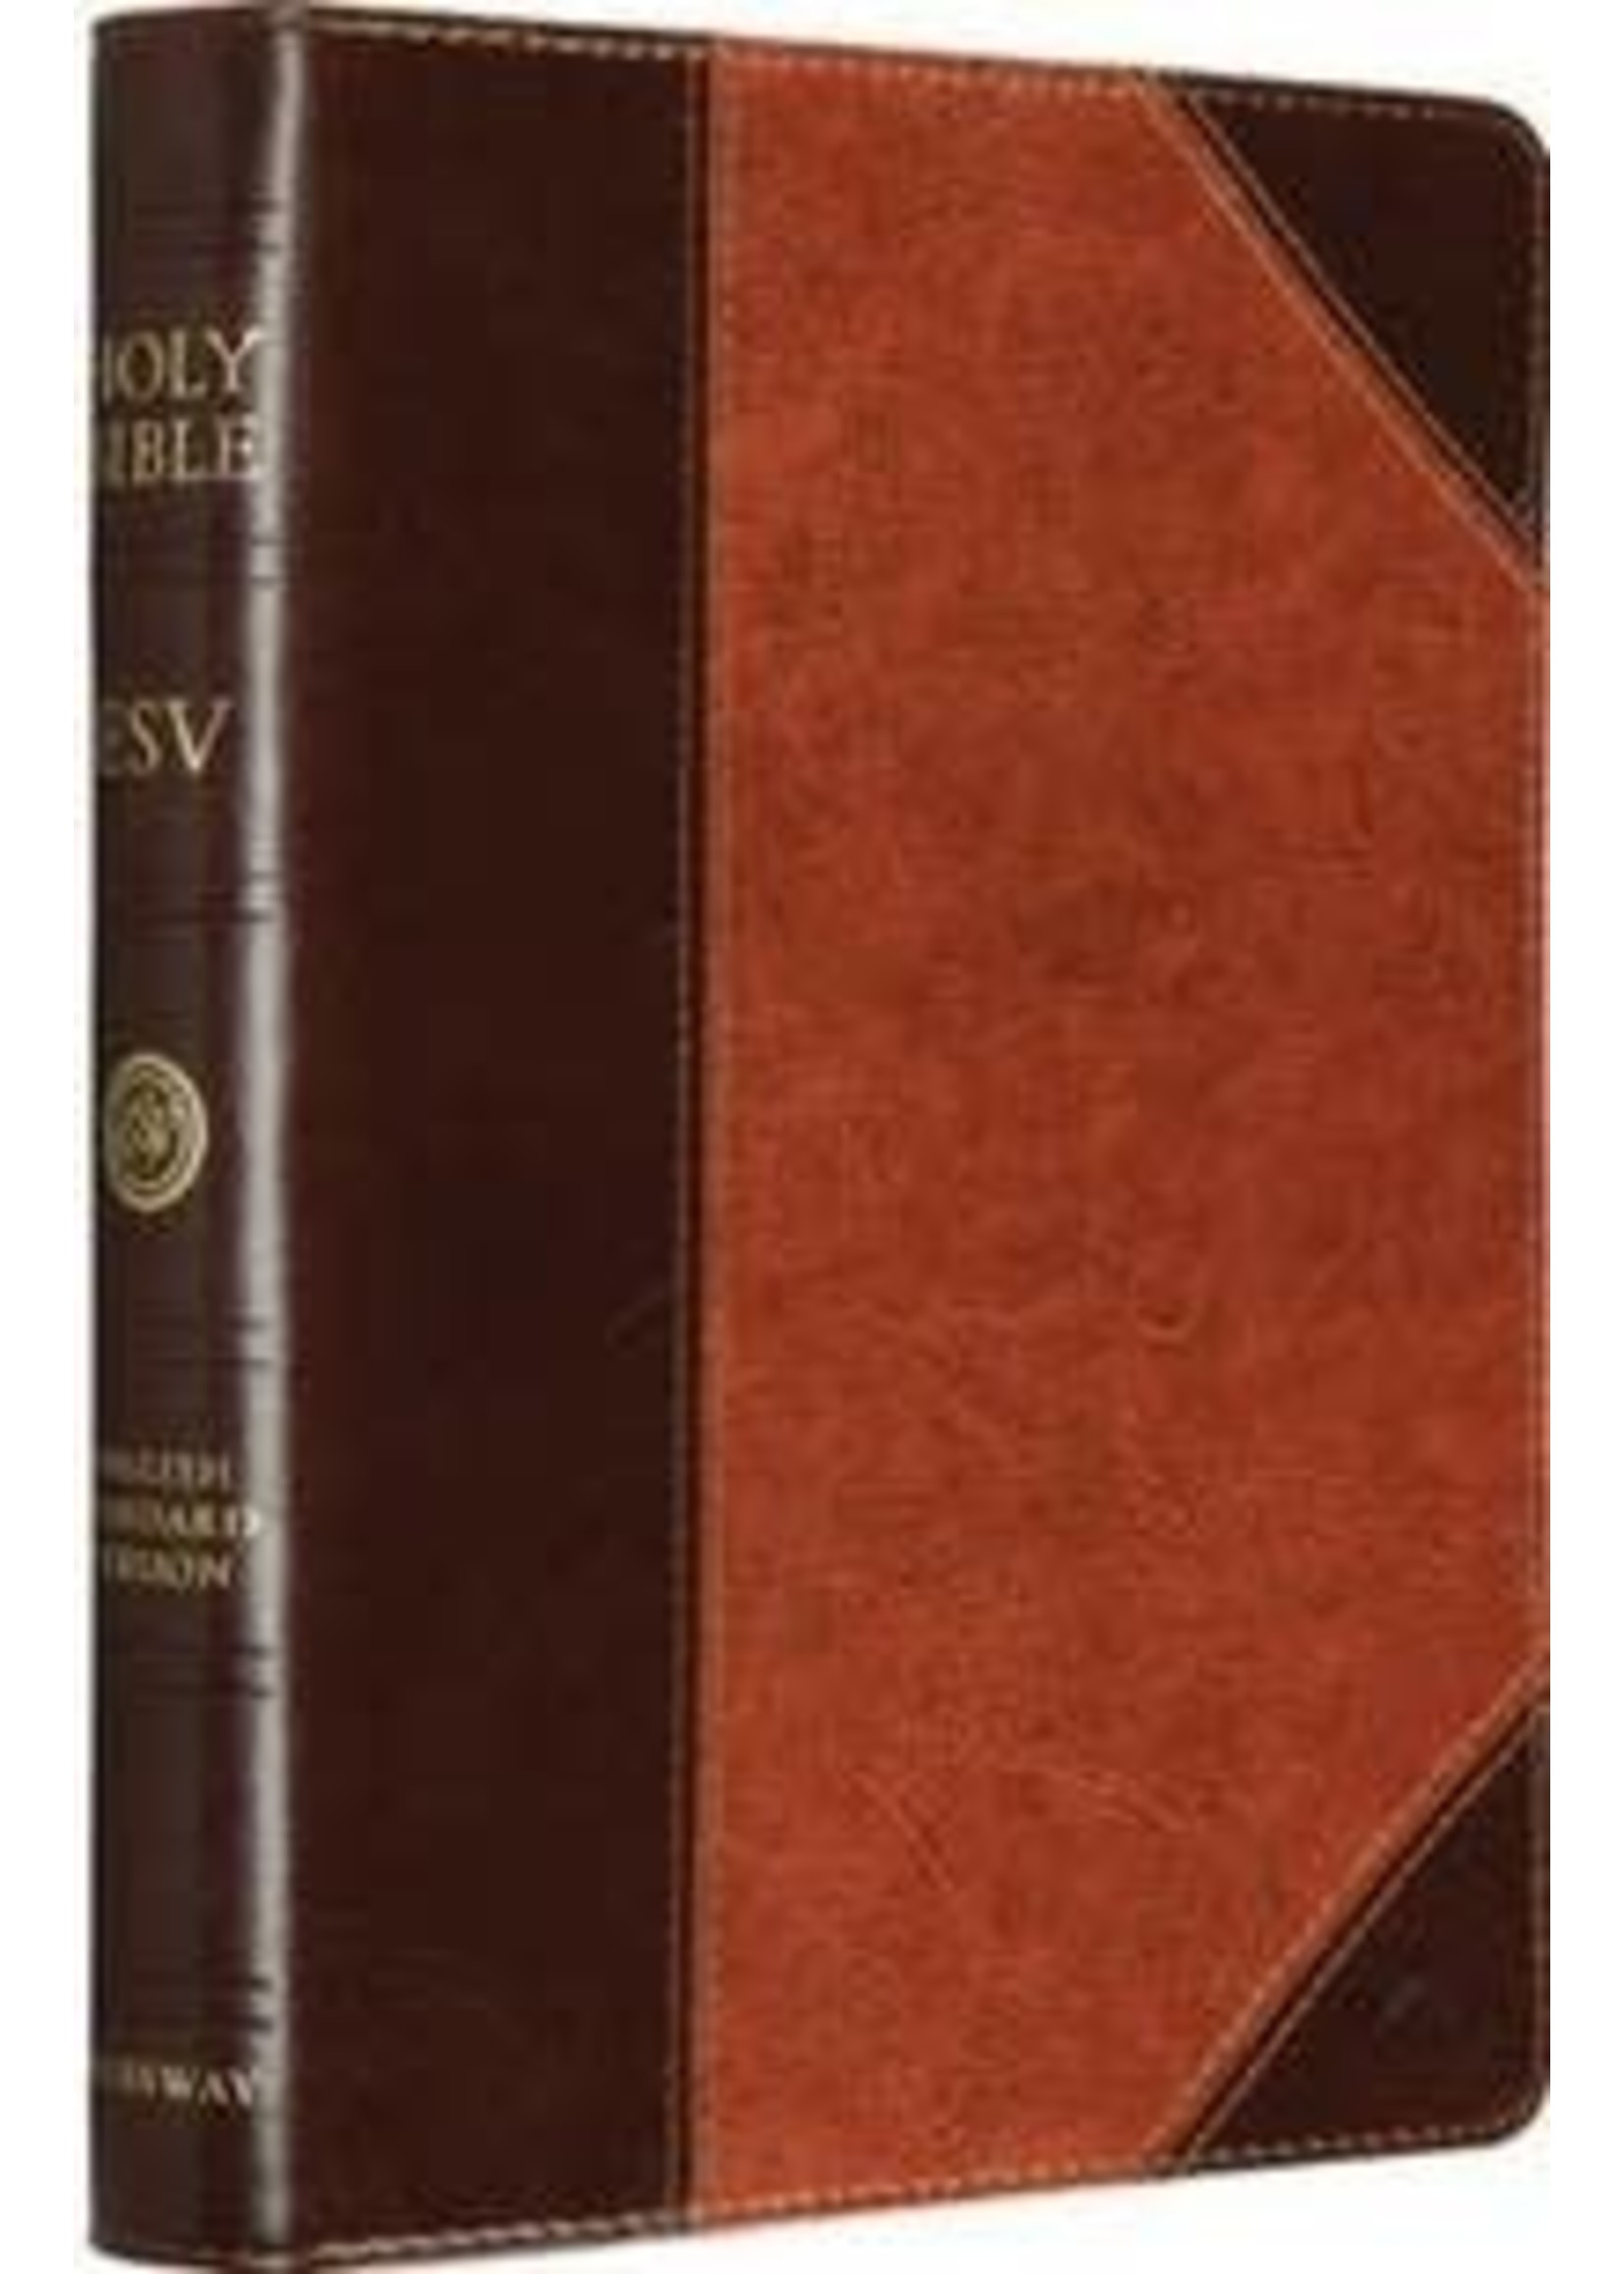 ESV Large Print Bible (TruTone, Brown/Cordovan